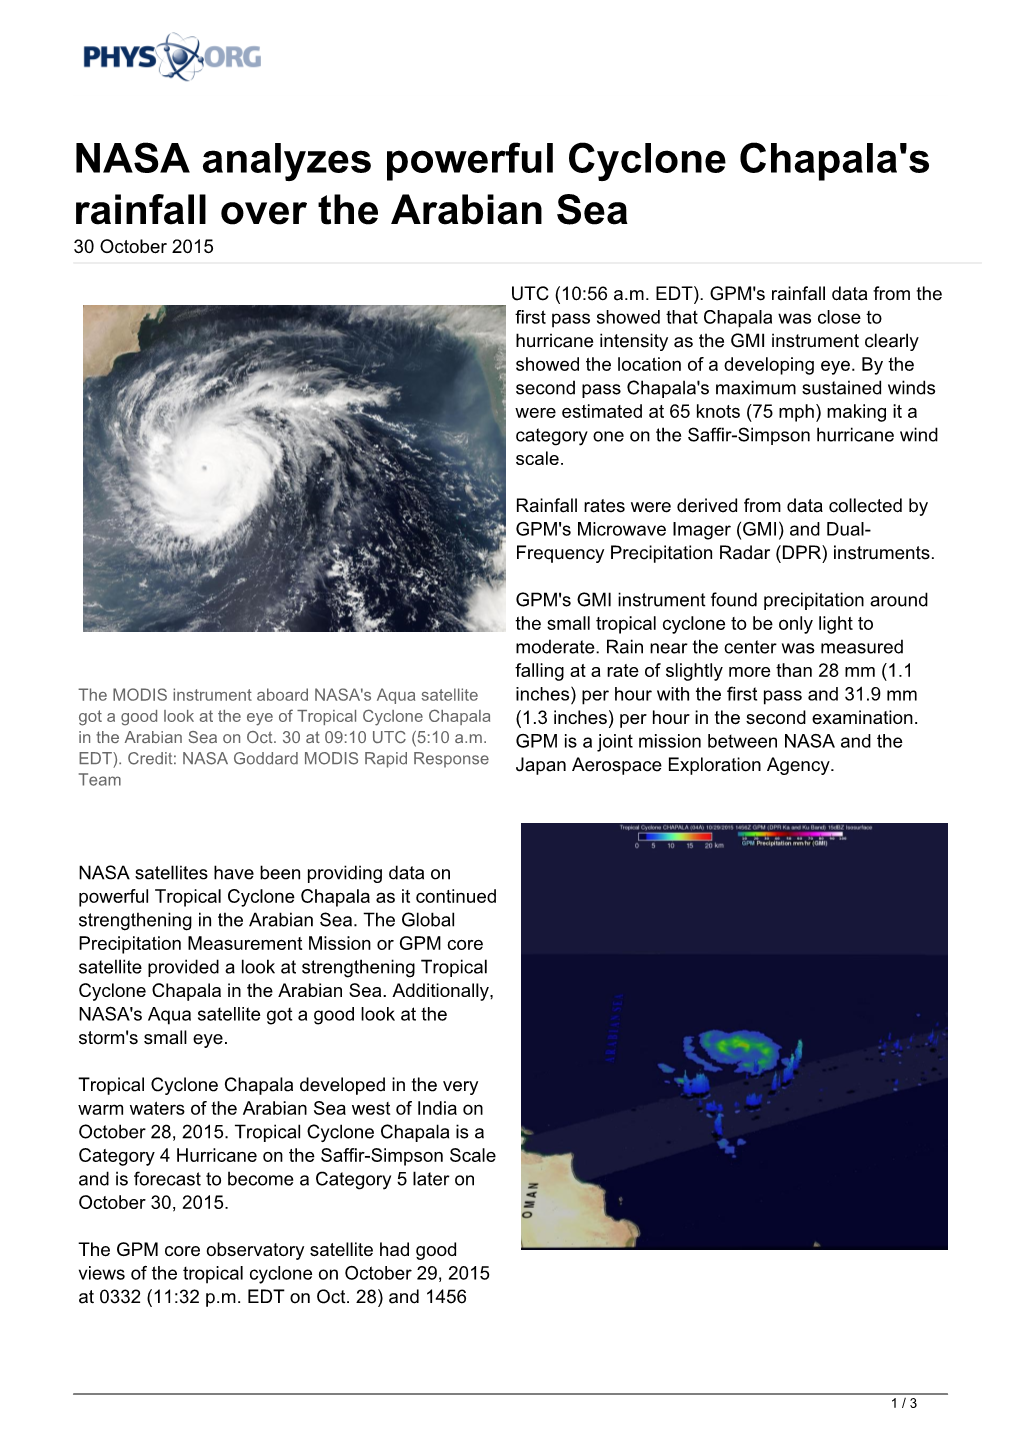 NASA Analyzes Powerful Cyclone Chapala's Rainfall Over the Arabian Sea 30 October 2015